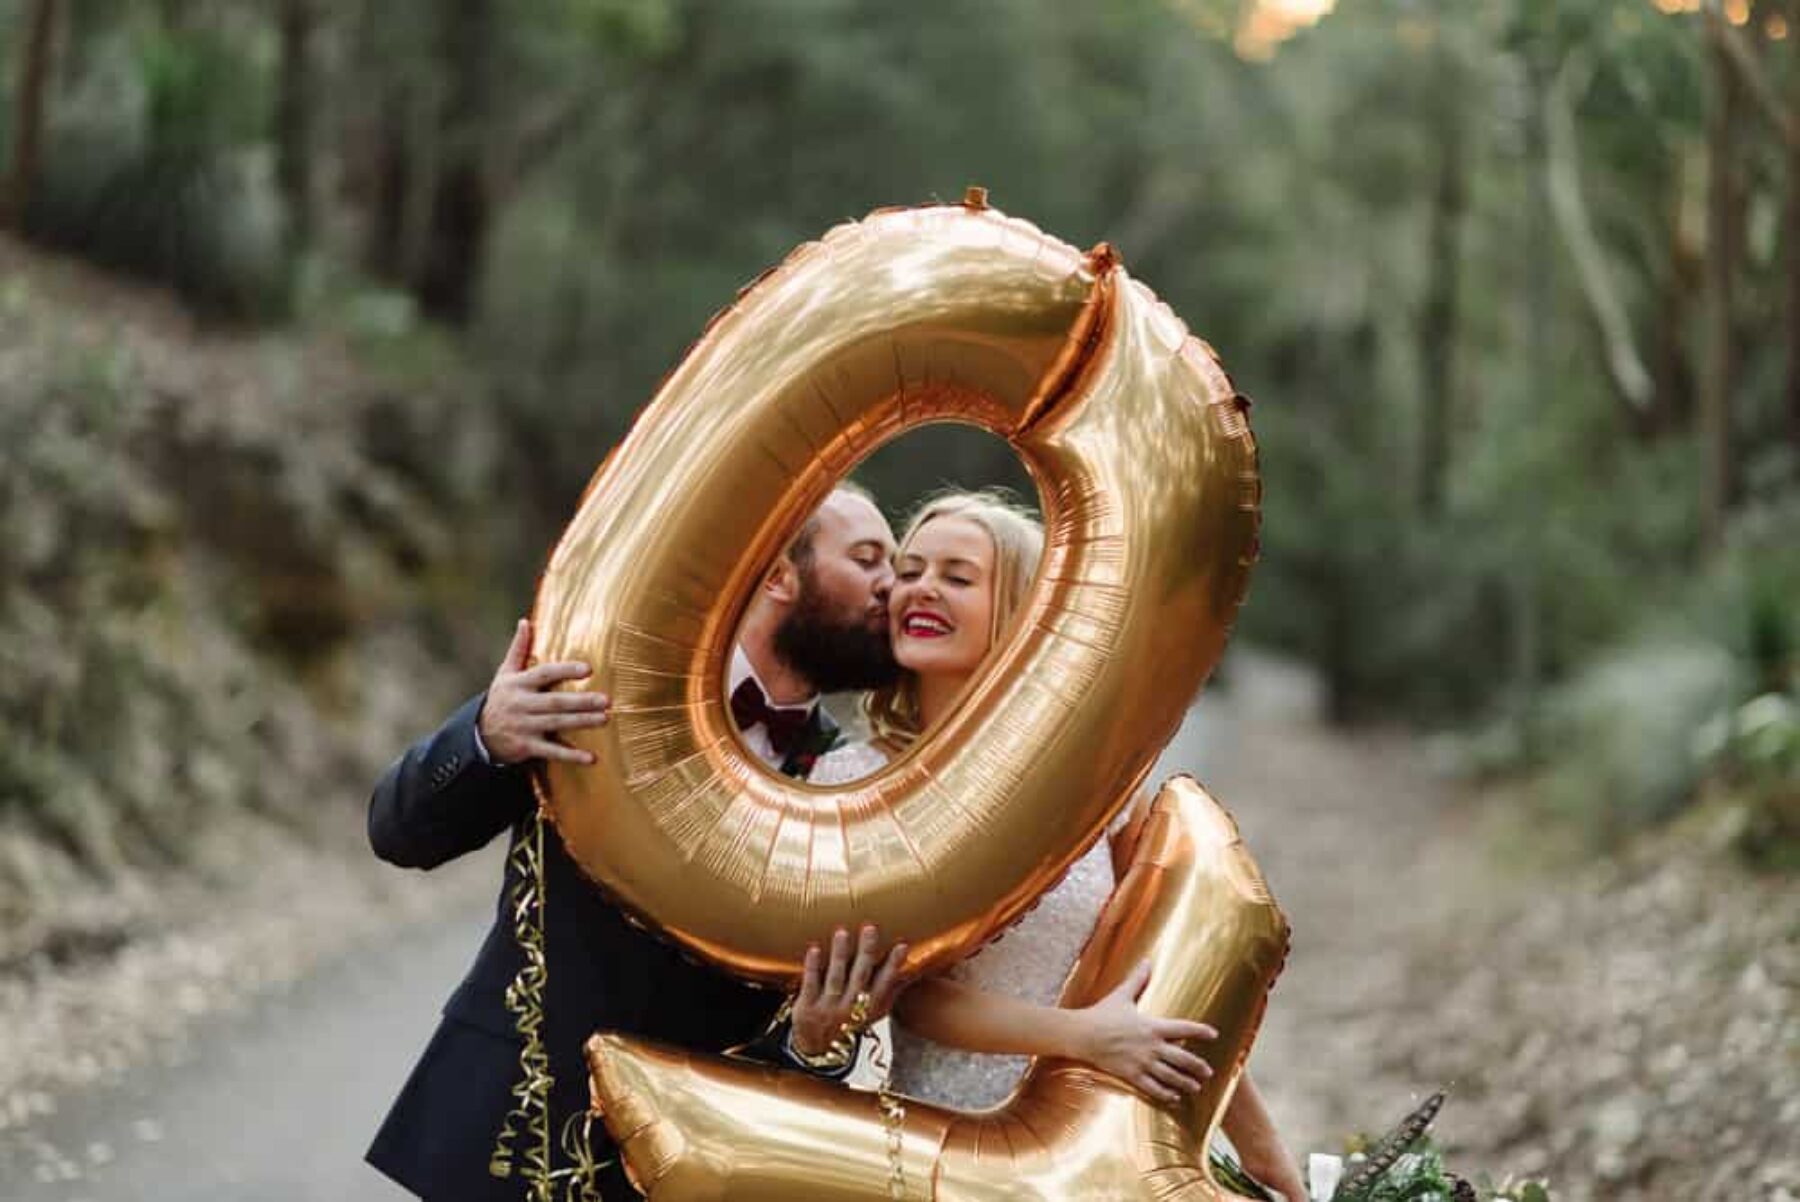 giant gold XO balloons / Sydney wedding Photographer Keelan Christopher